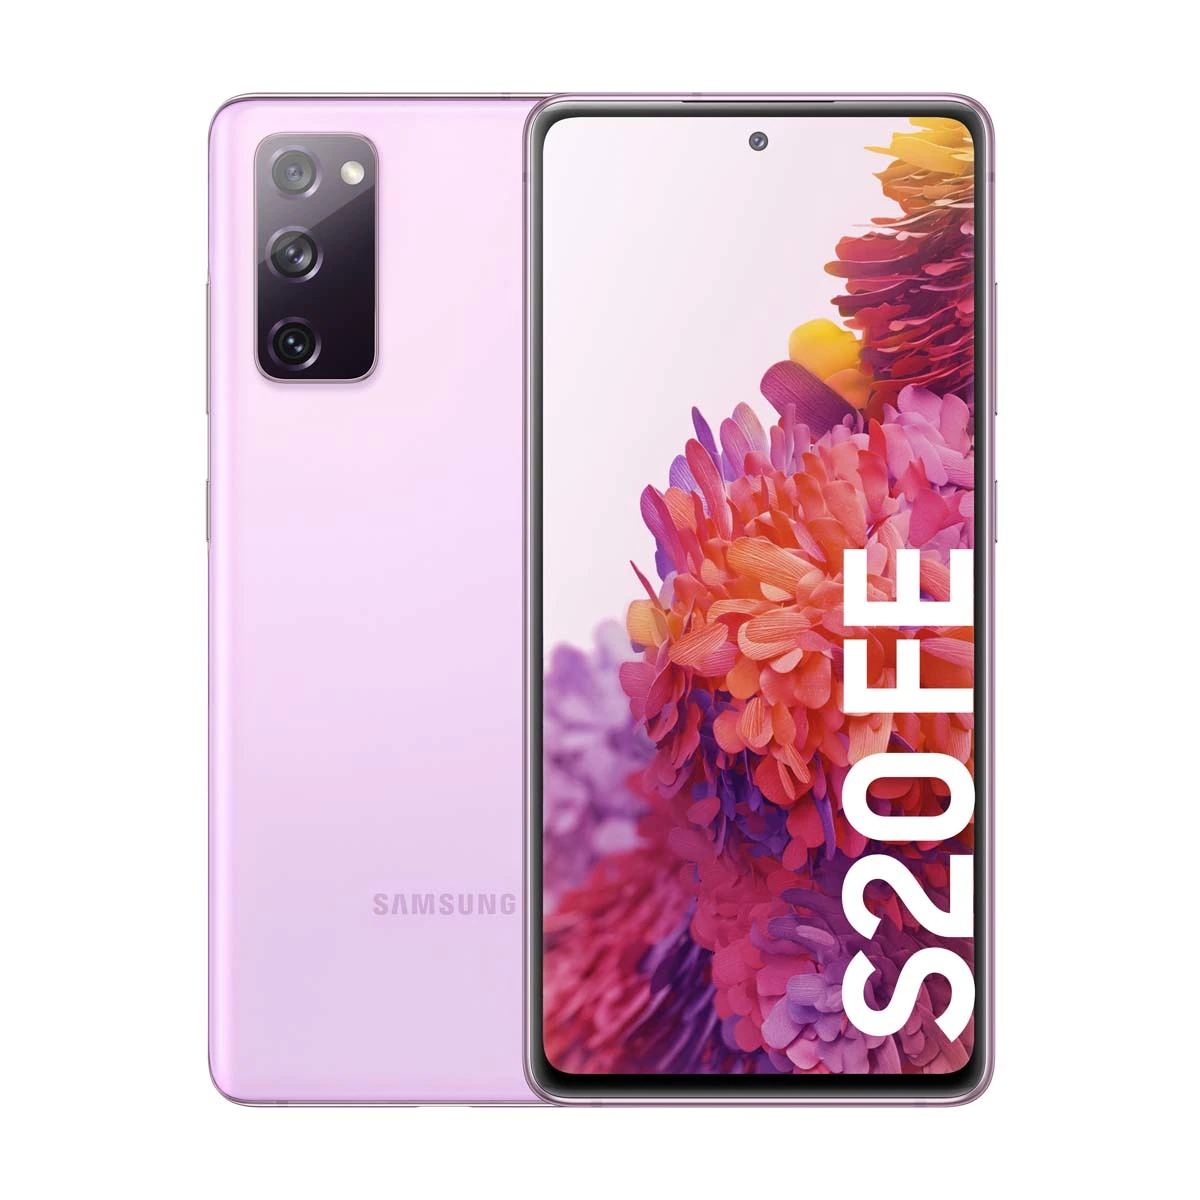 Samsung Galaxy S20 FE 8 GB + 256 GB violeta móvil libre